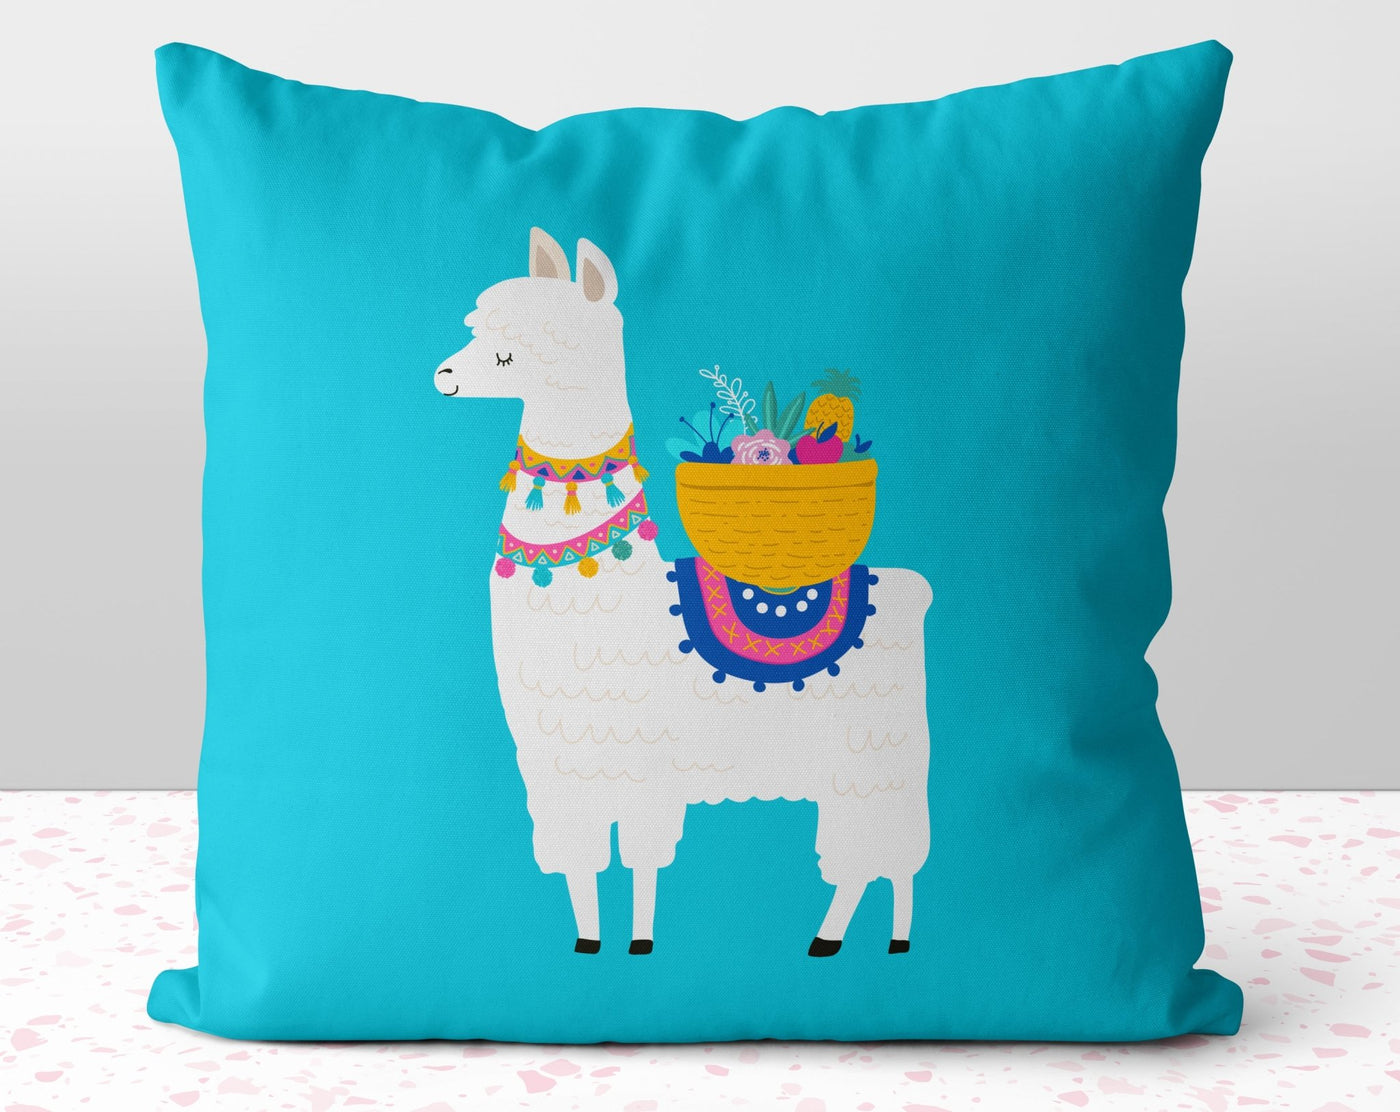 Serious Llama Teal Turquoise Square Pillow Cover Throw - Cush Potato Pillows